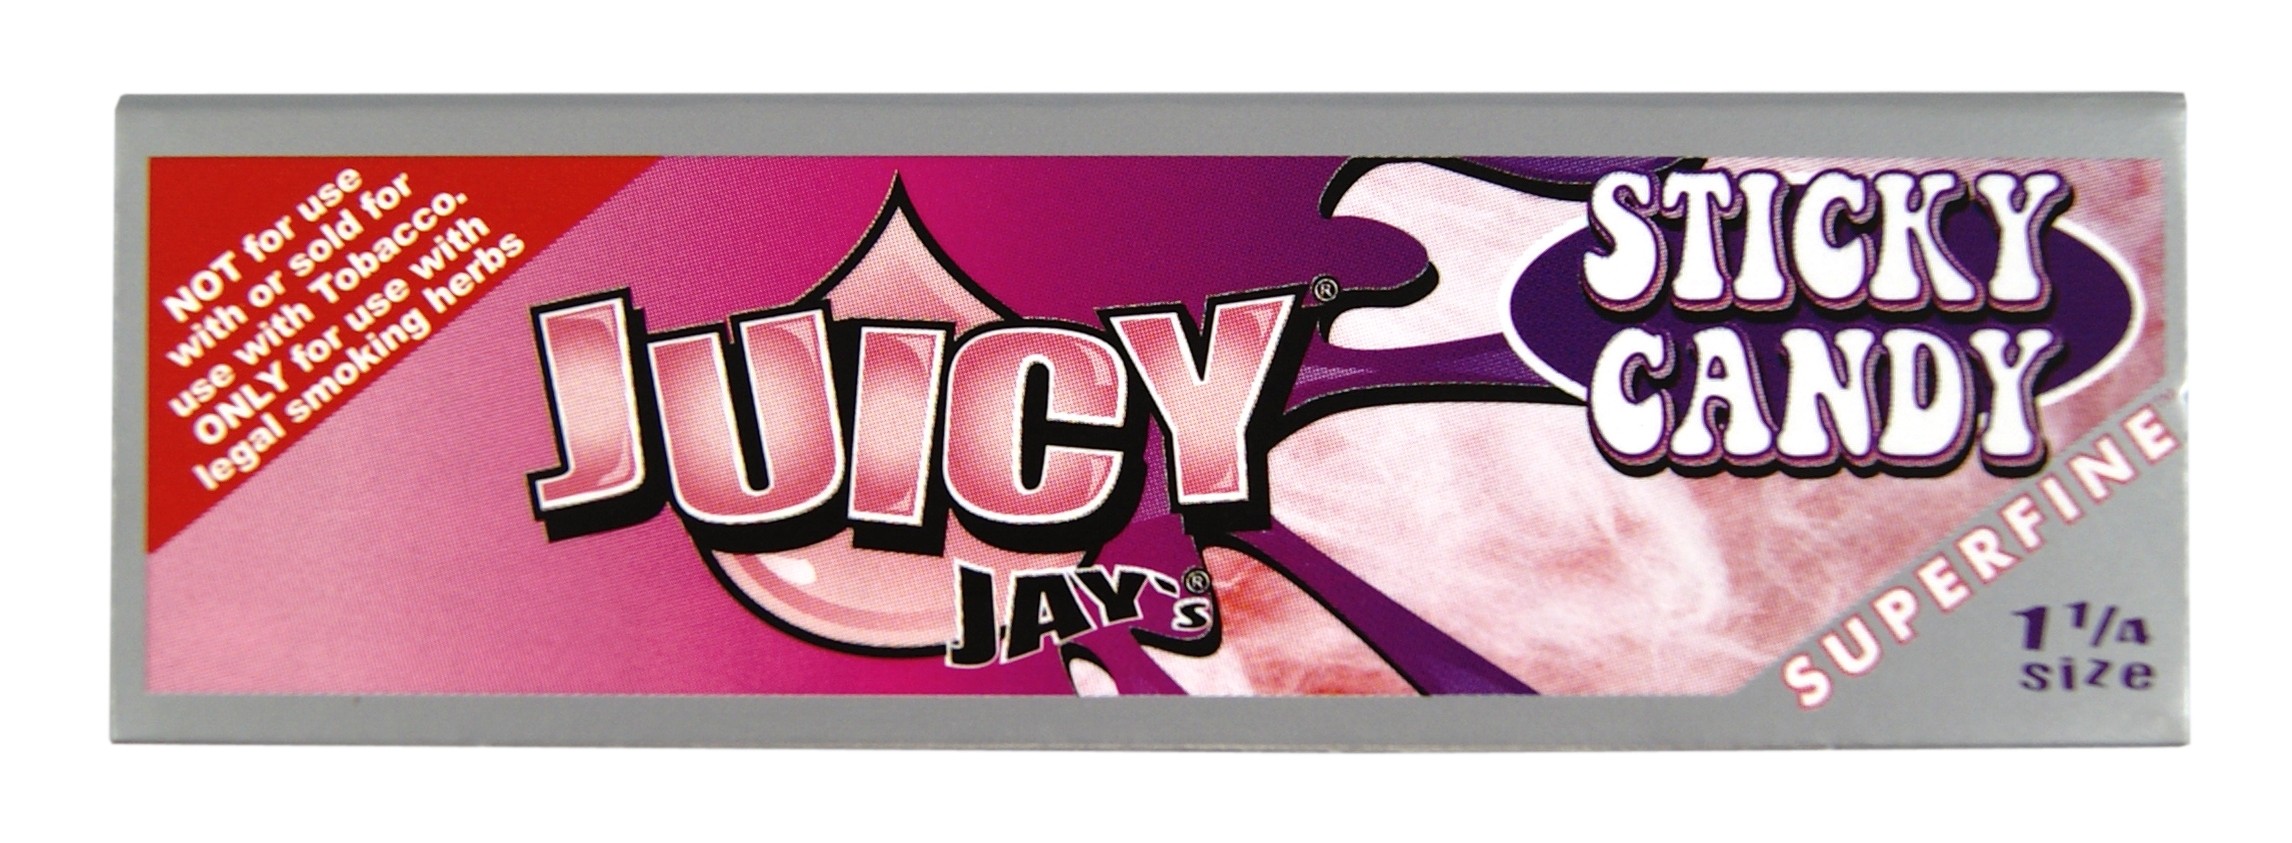 Juicy Jay´s 1/4 Superfine - Sticky Candy - Librillo